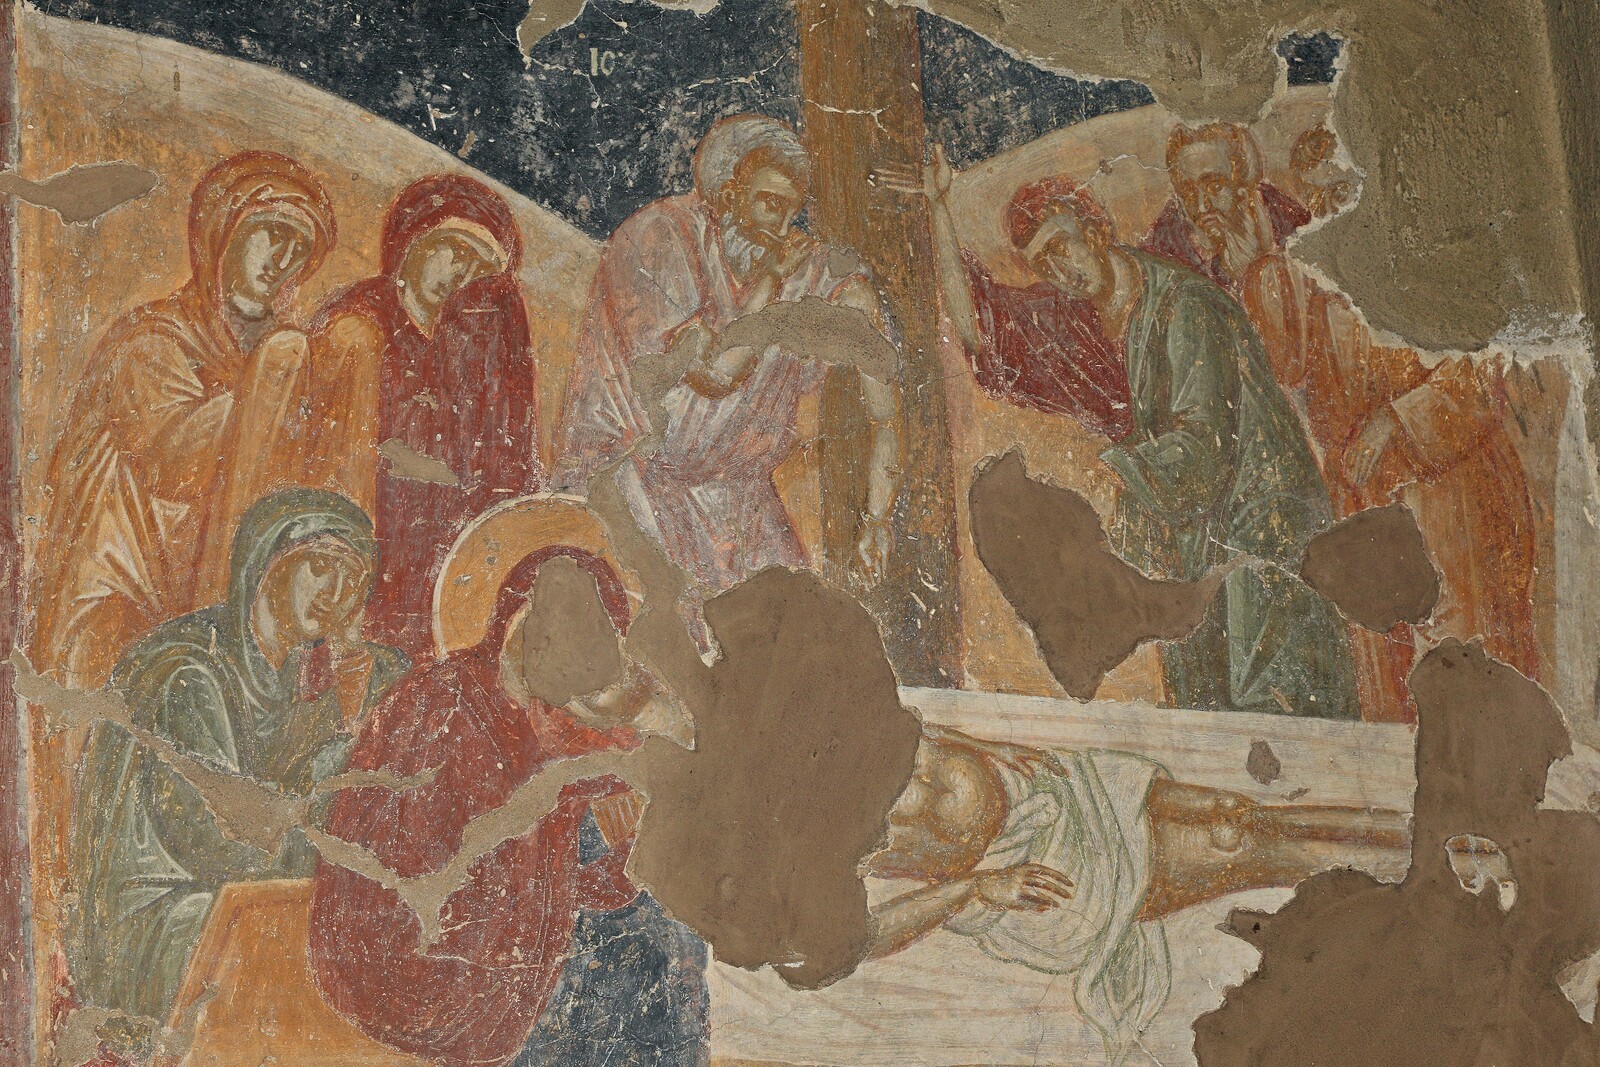 Lamentation of Christ, detail